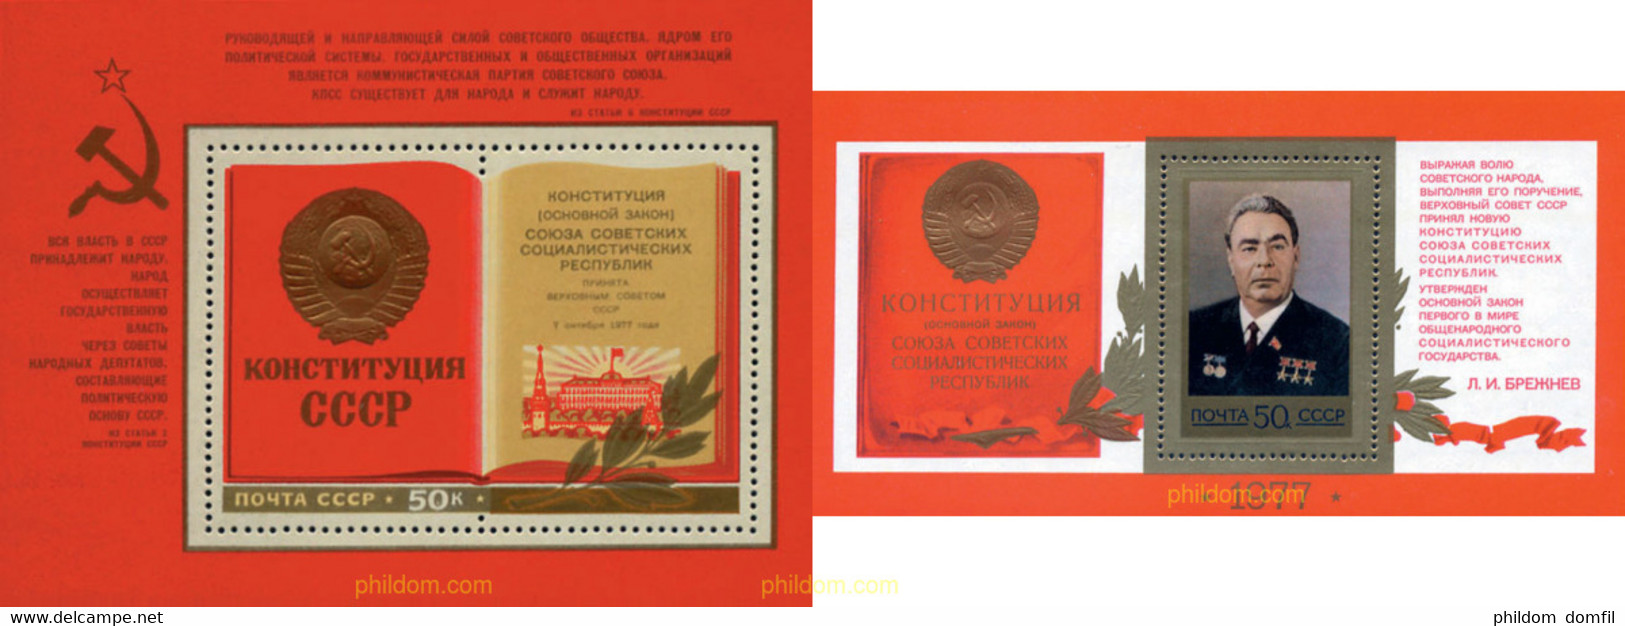 50252 MNH UNION SOVIETICA 1977 NUEVA CONSTITUCION - Collections